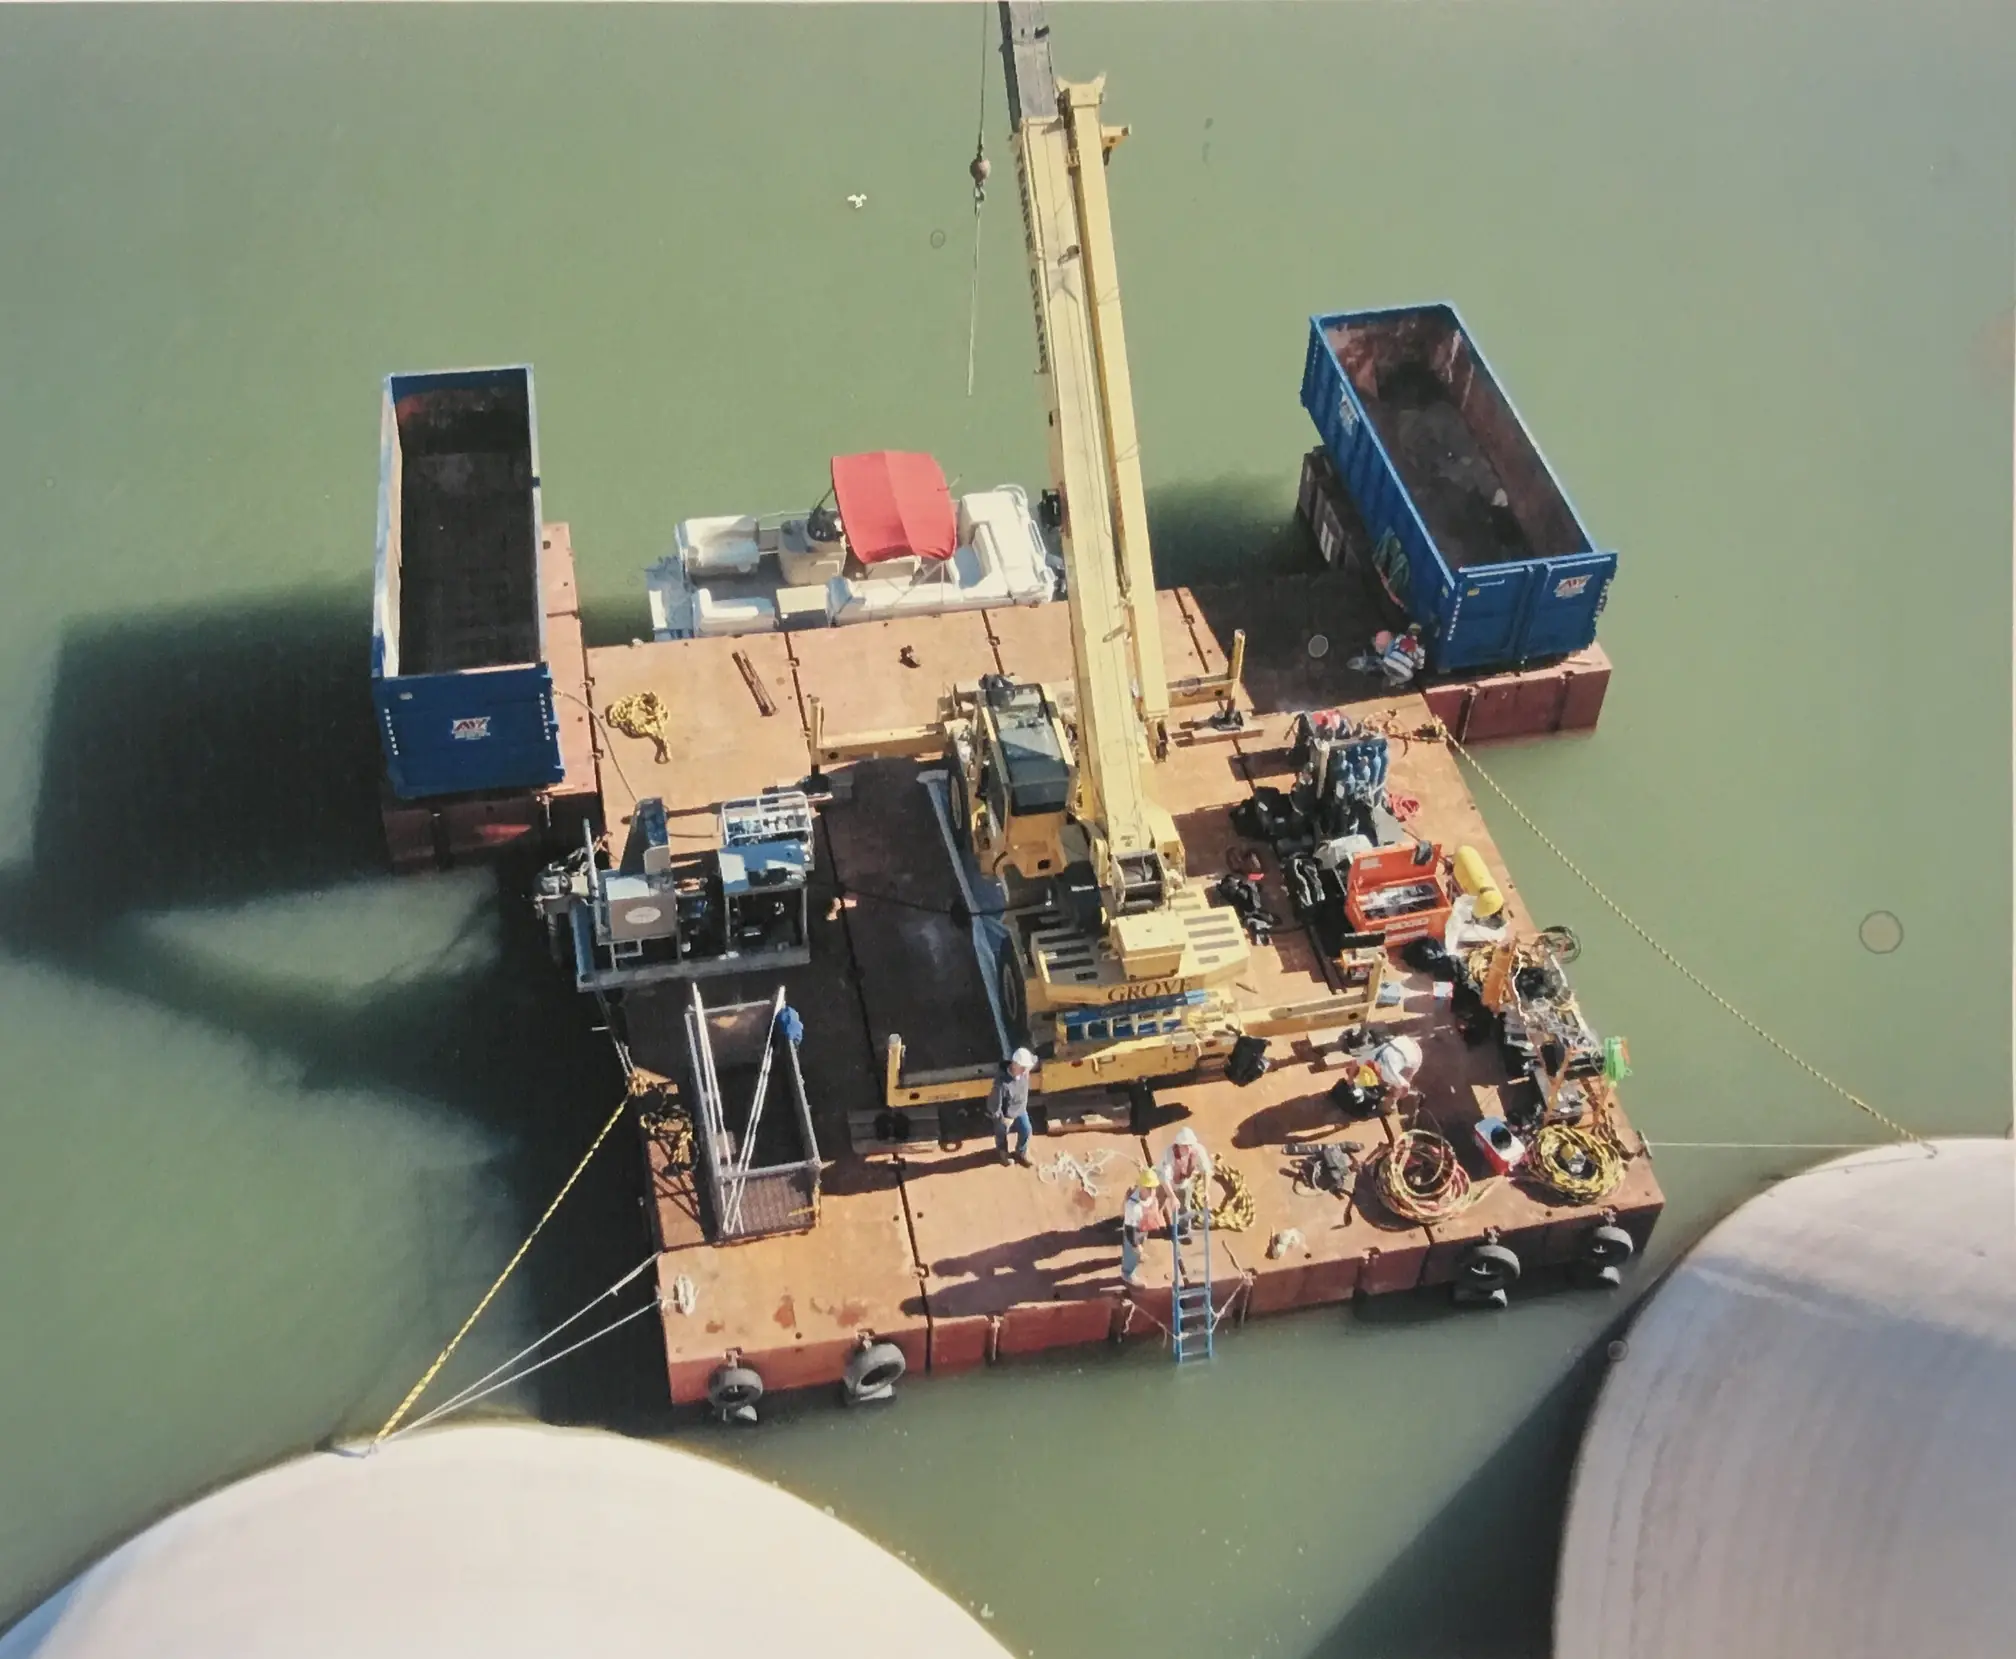 A fleet of equipment, including a rough terrain crane on barges, preparing for dam work, showcasing adaptability.